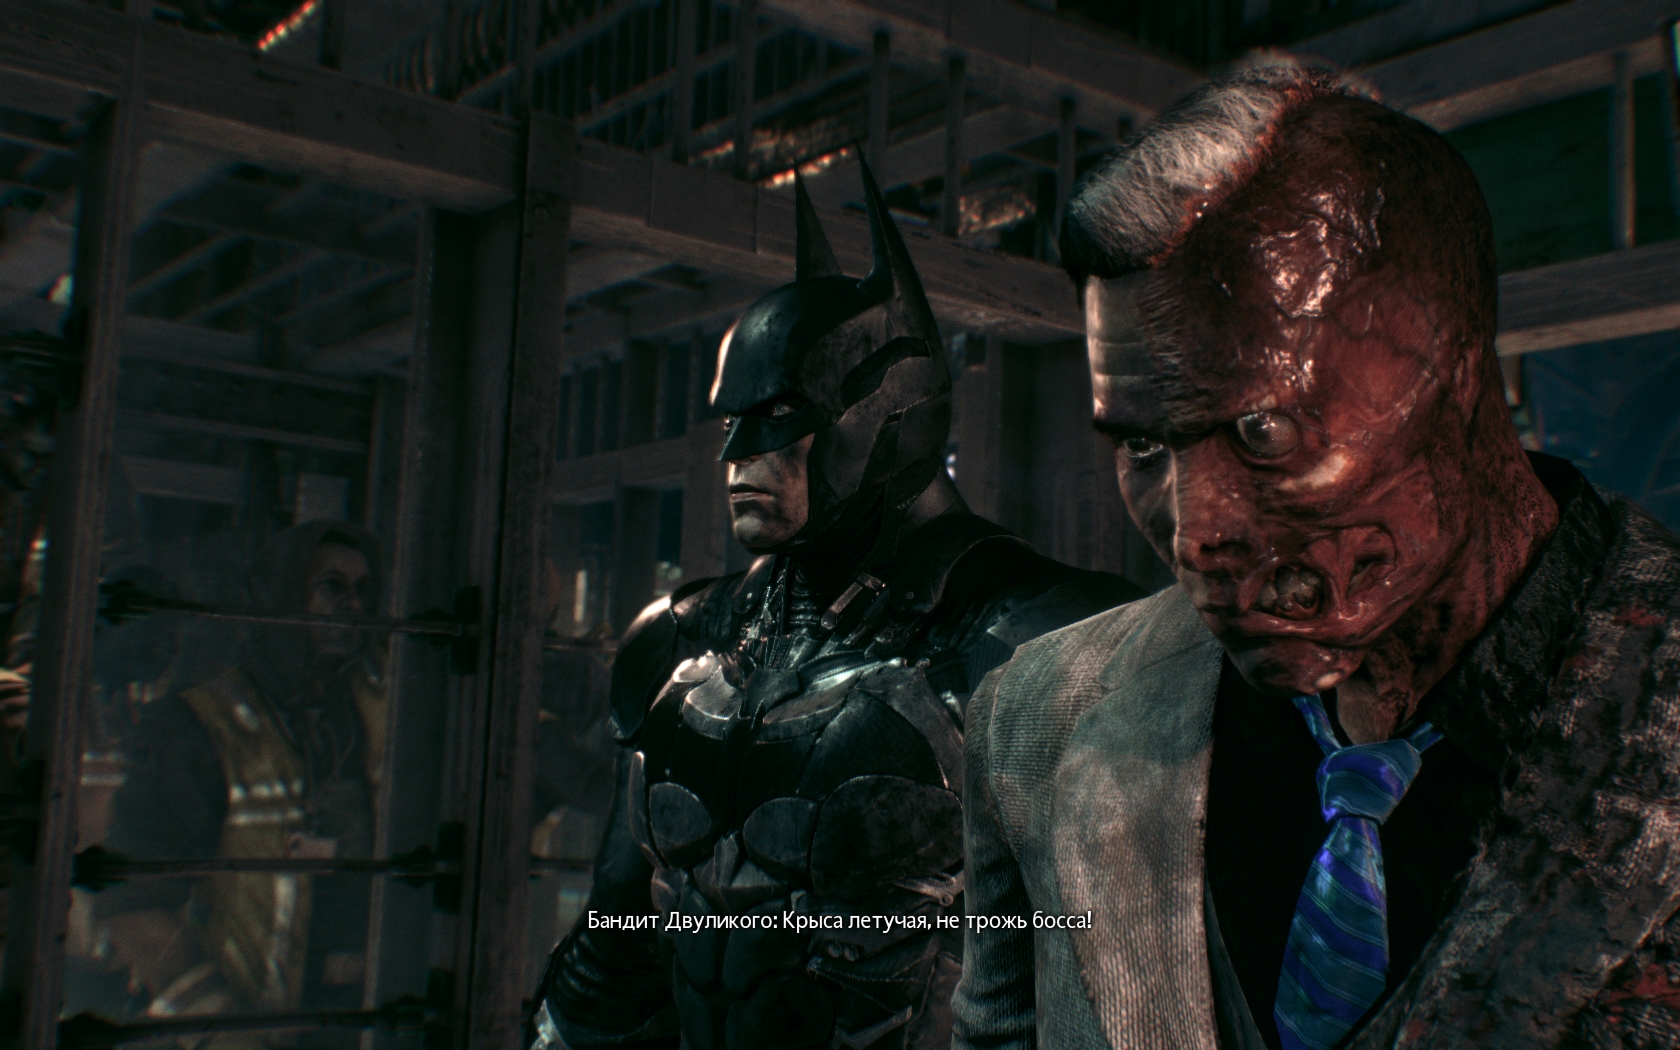 Batman: Arkham Knight Двуликий добегался